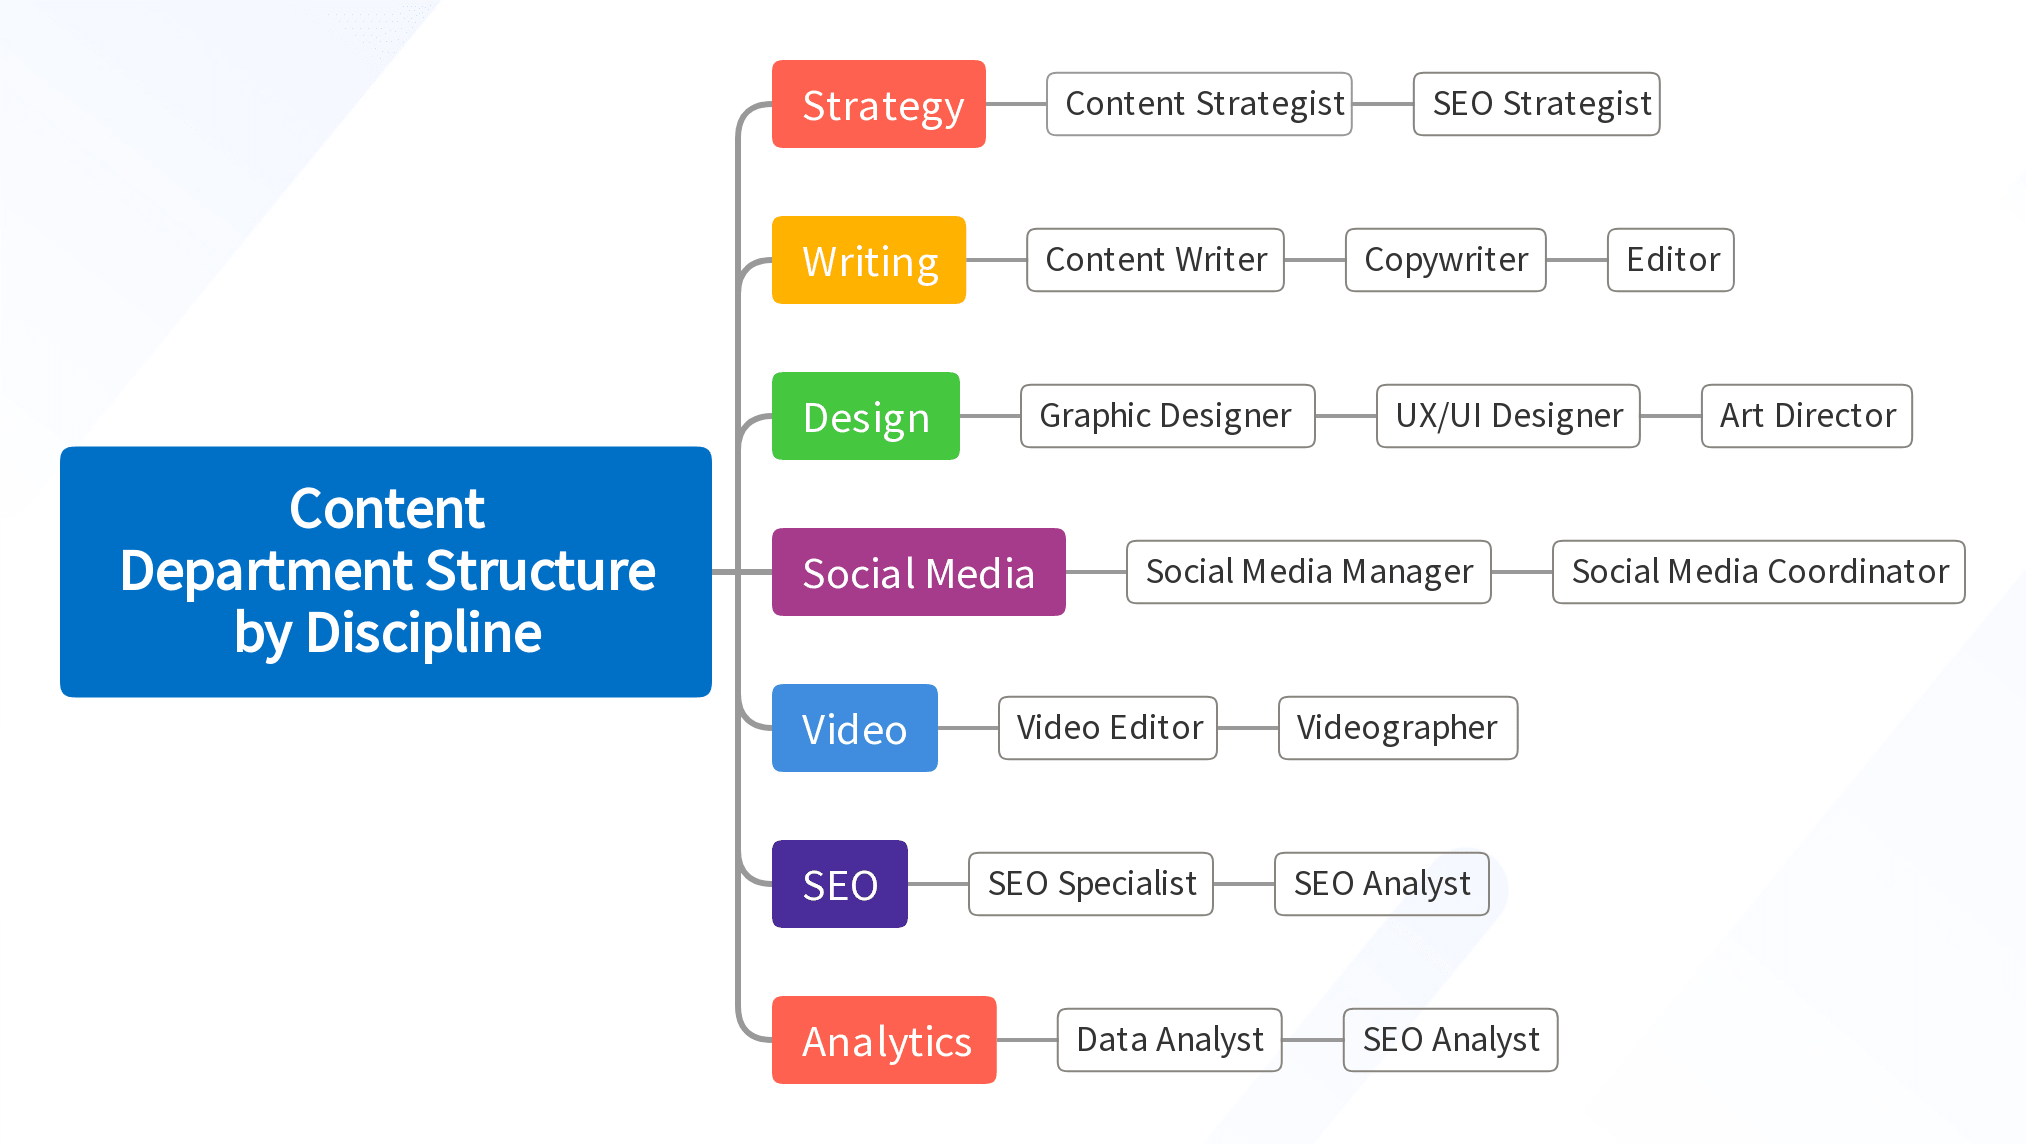 Content Department Structure by Discipline